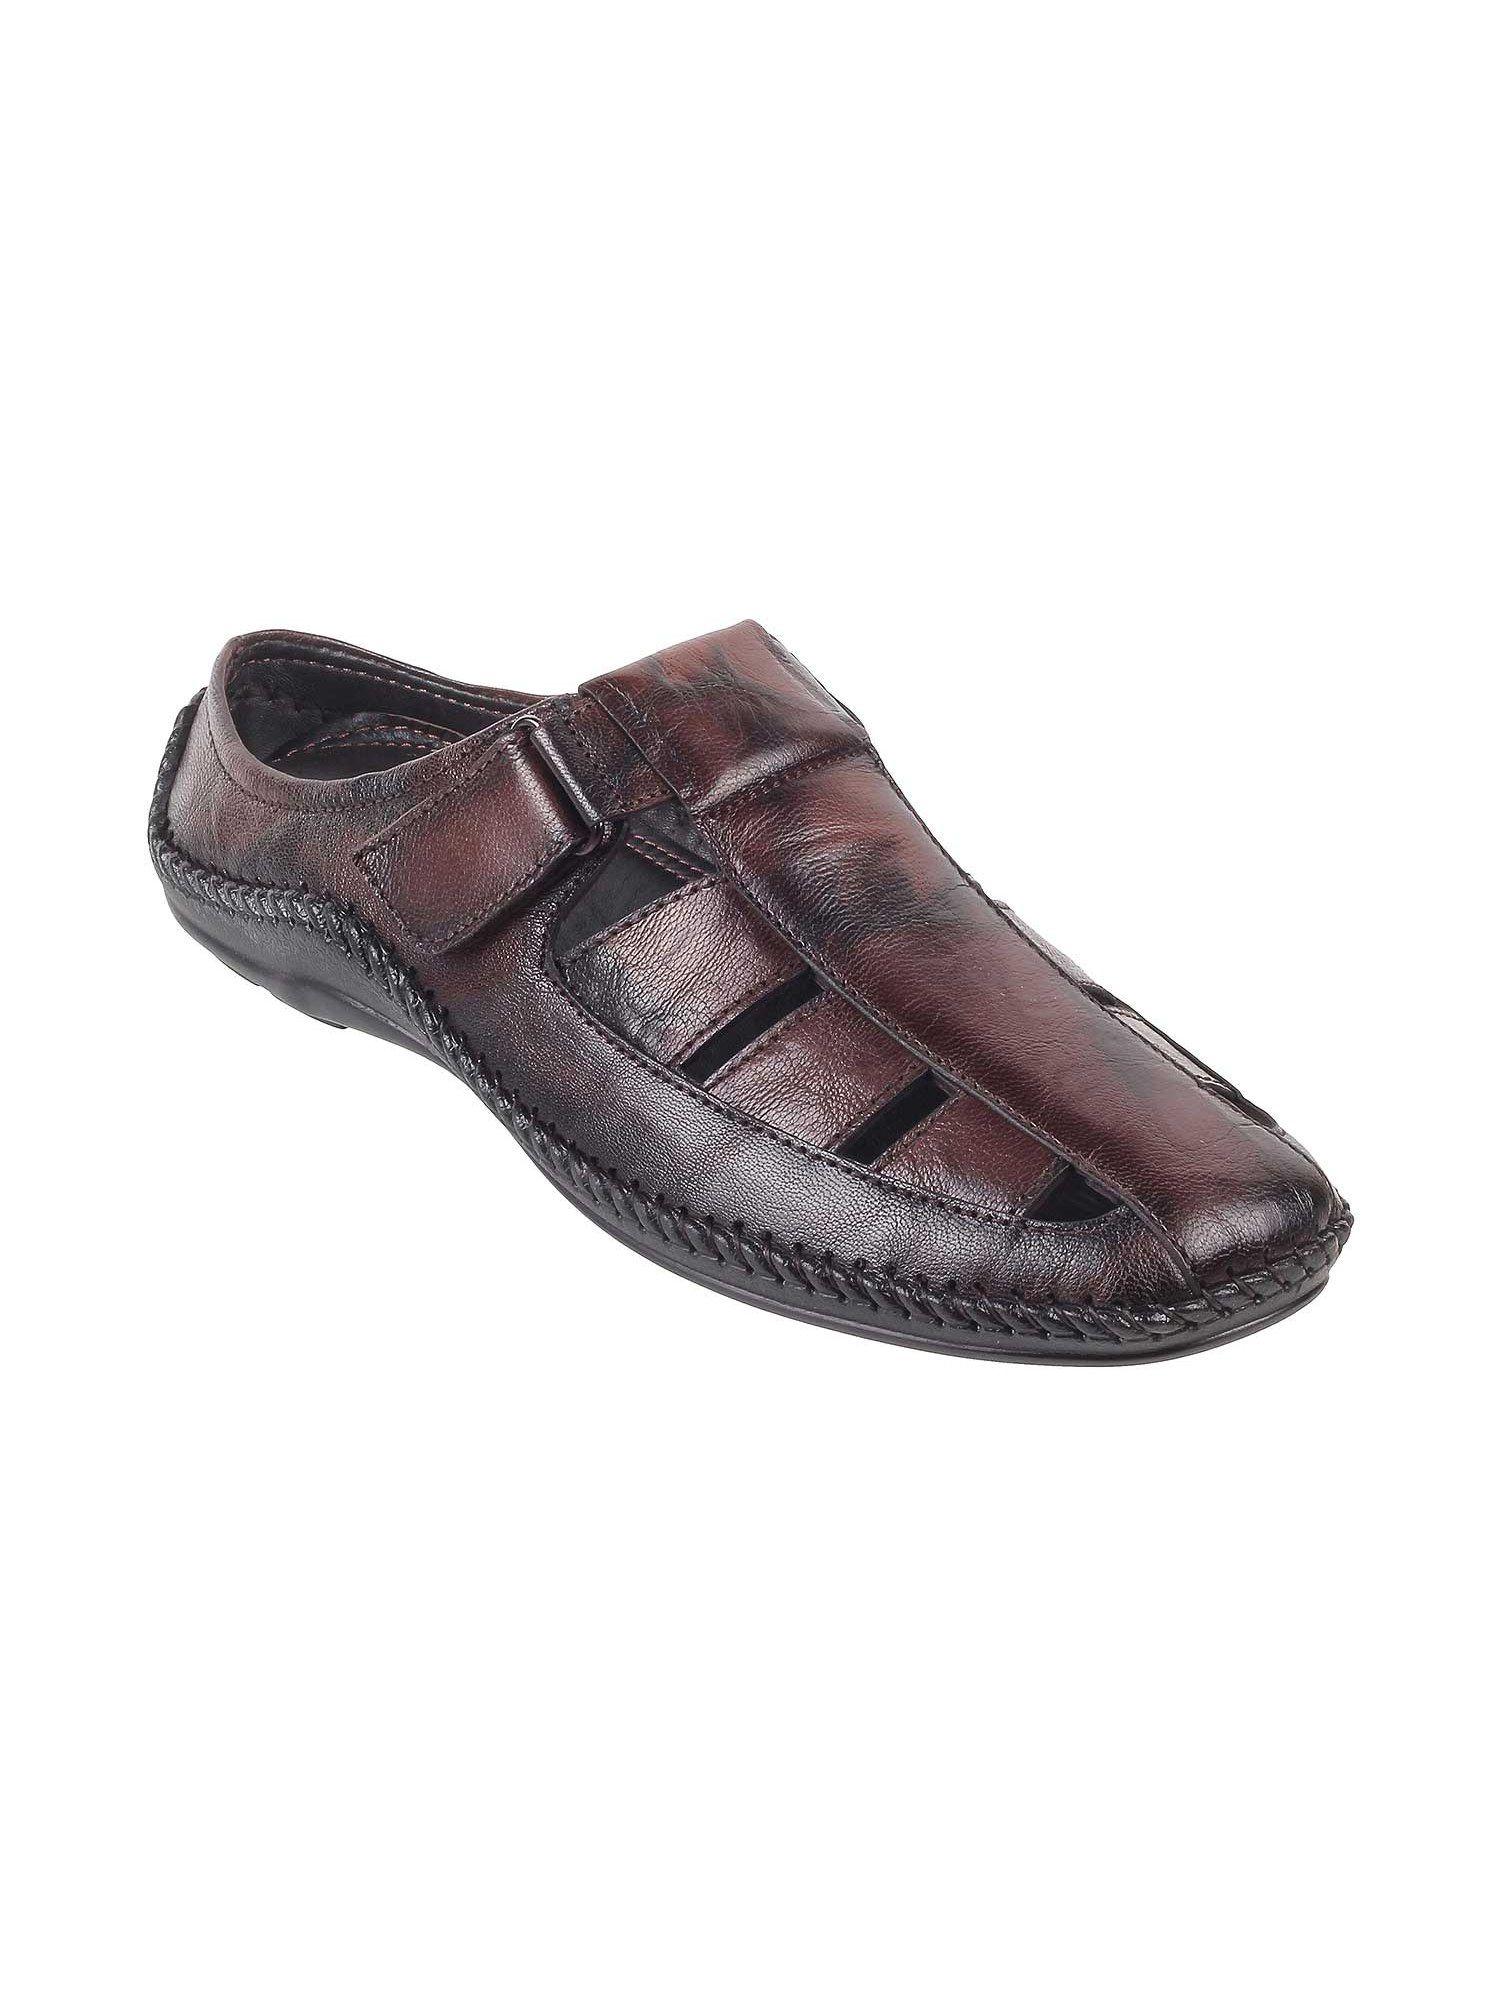 men brown leather sandals